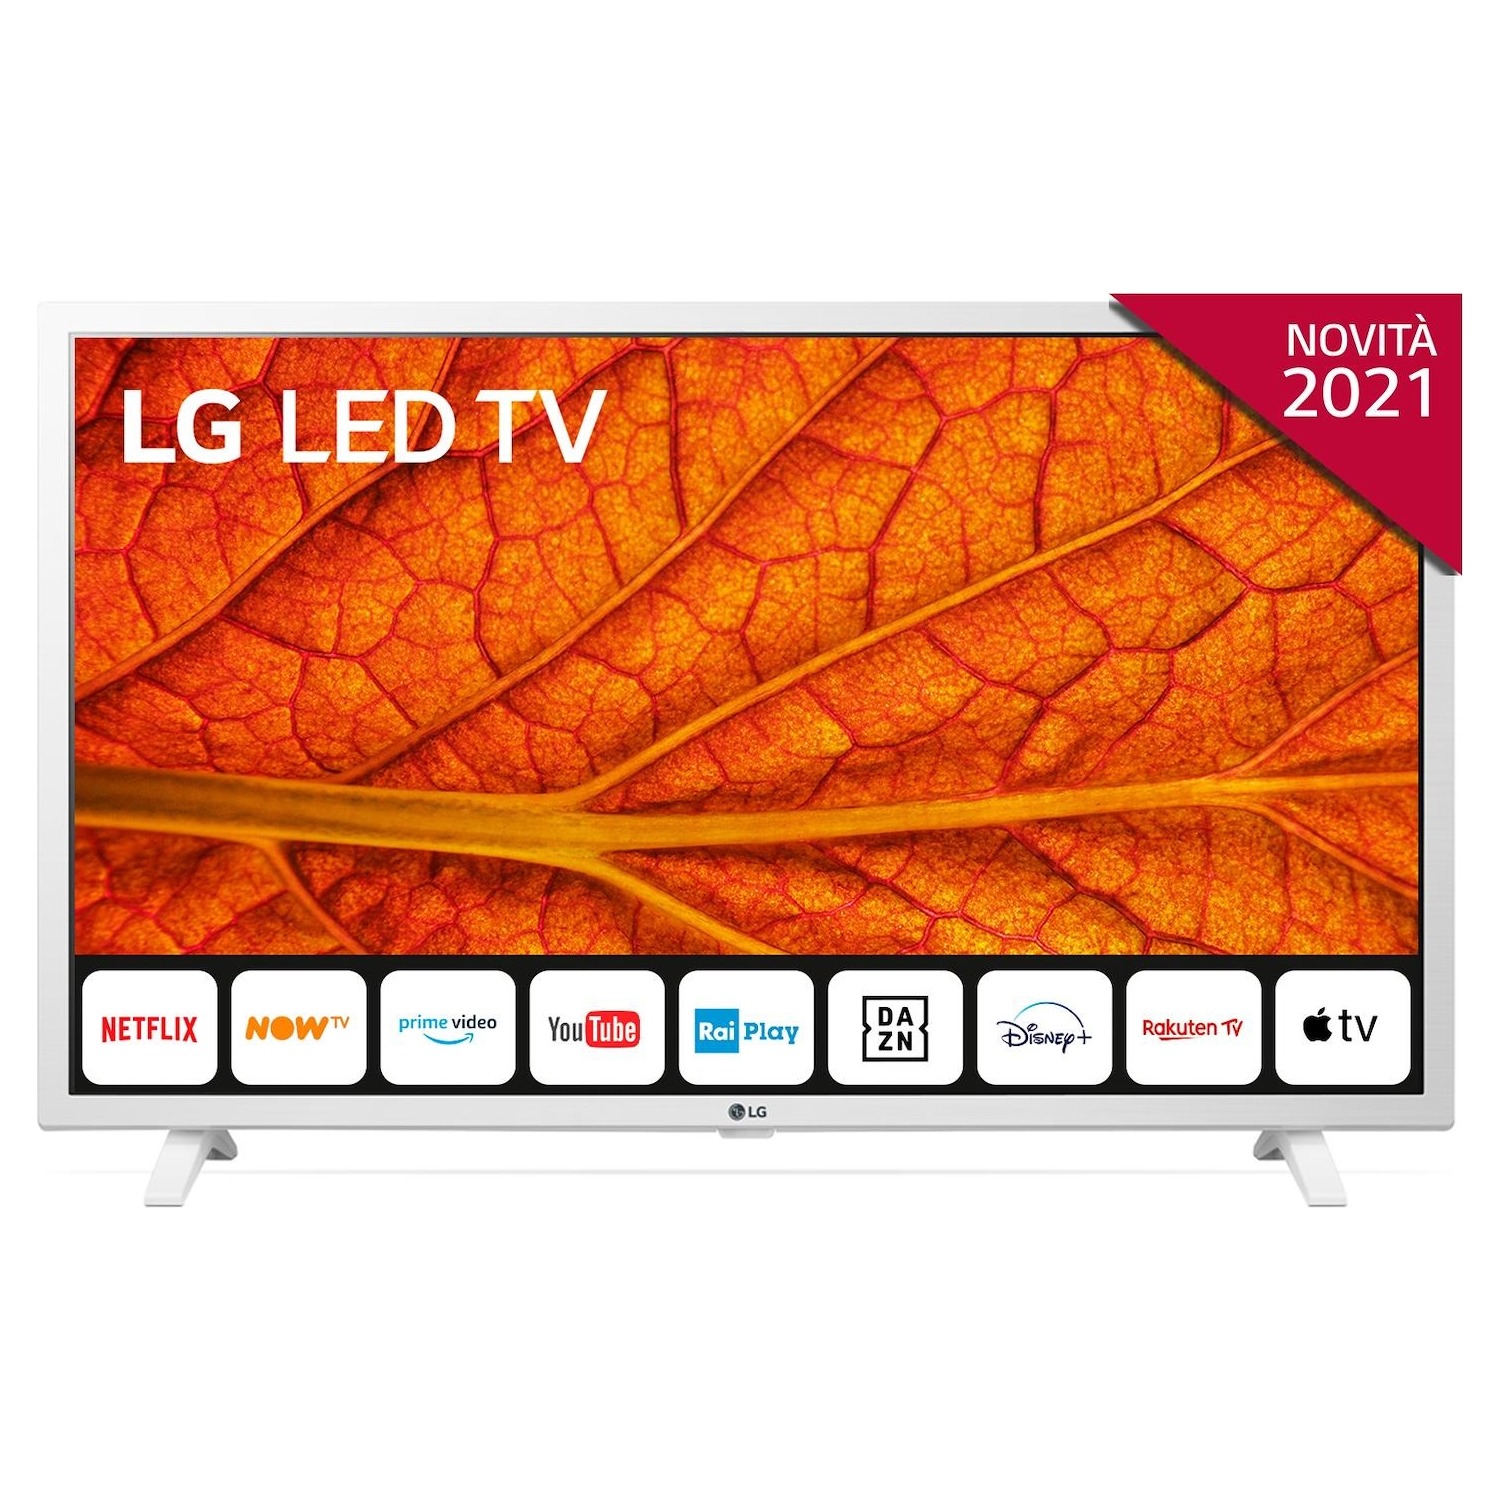 Immagine per TV LED Smart LG 32LM6380P da DIMOStore